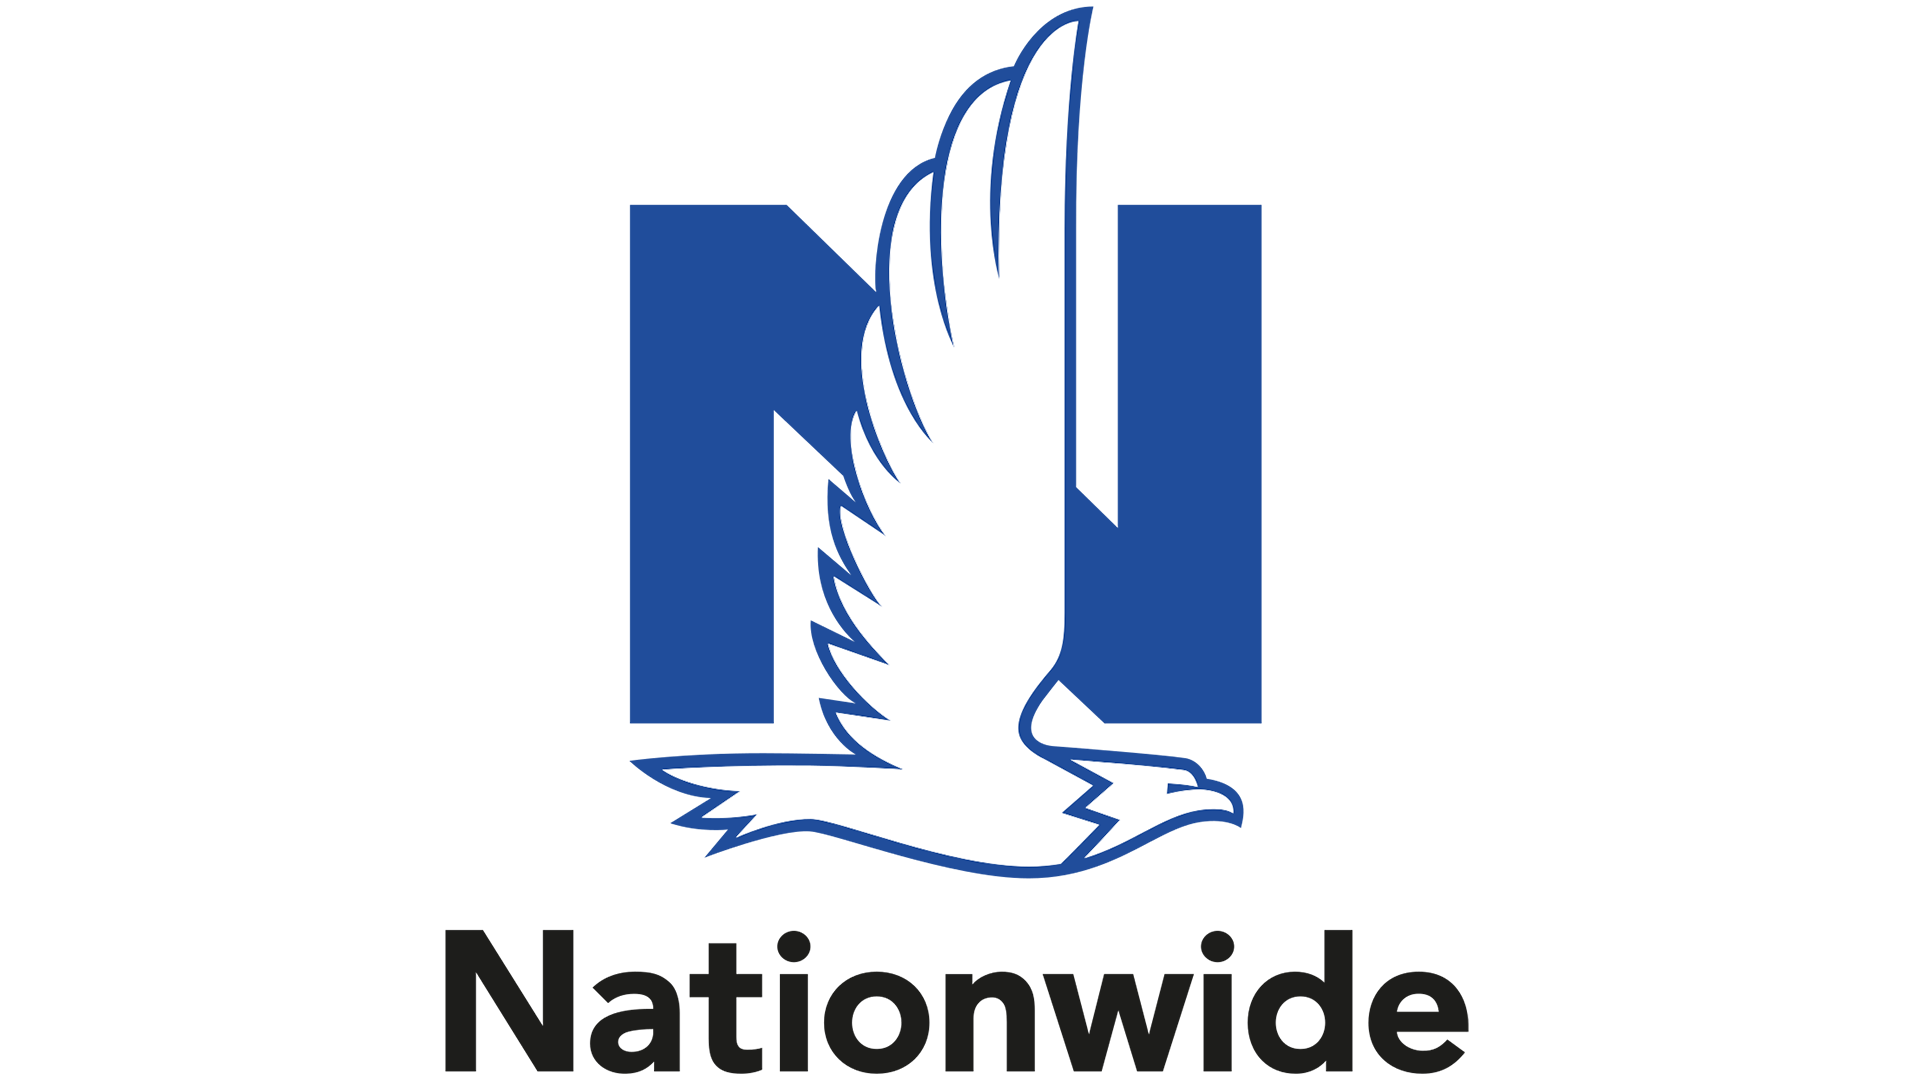 Logo for Nationwide